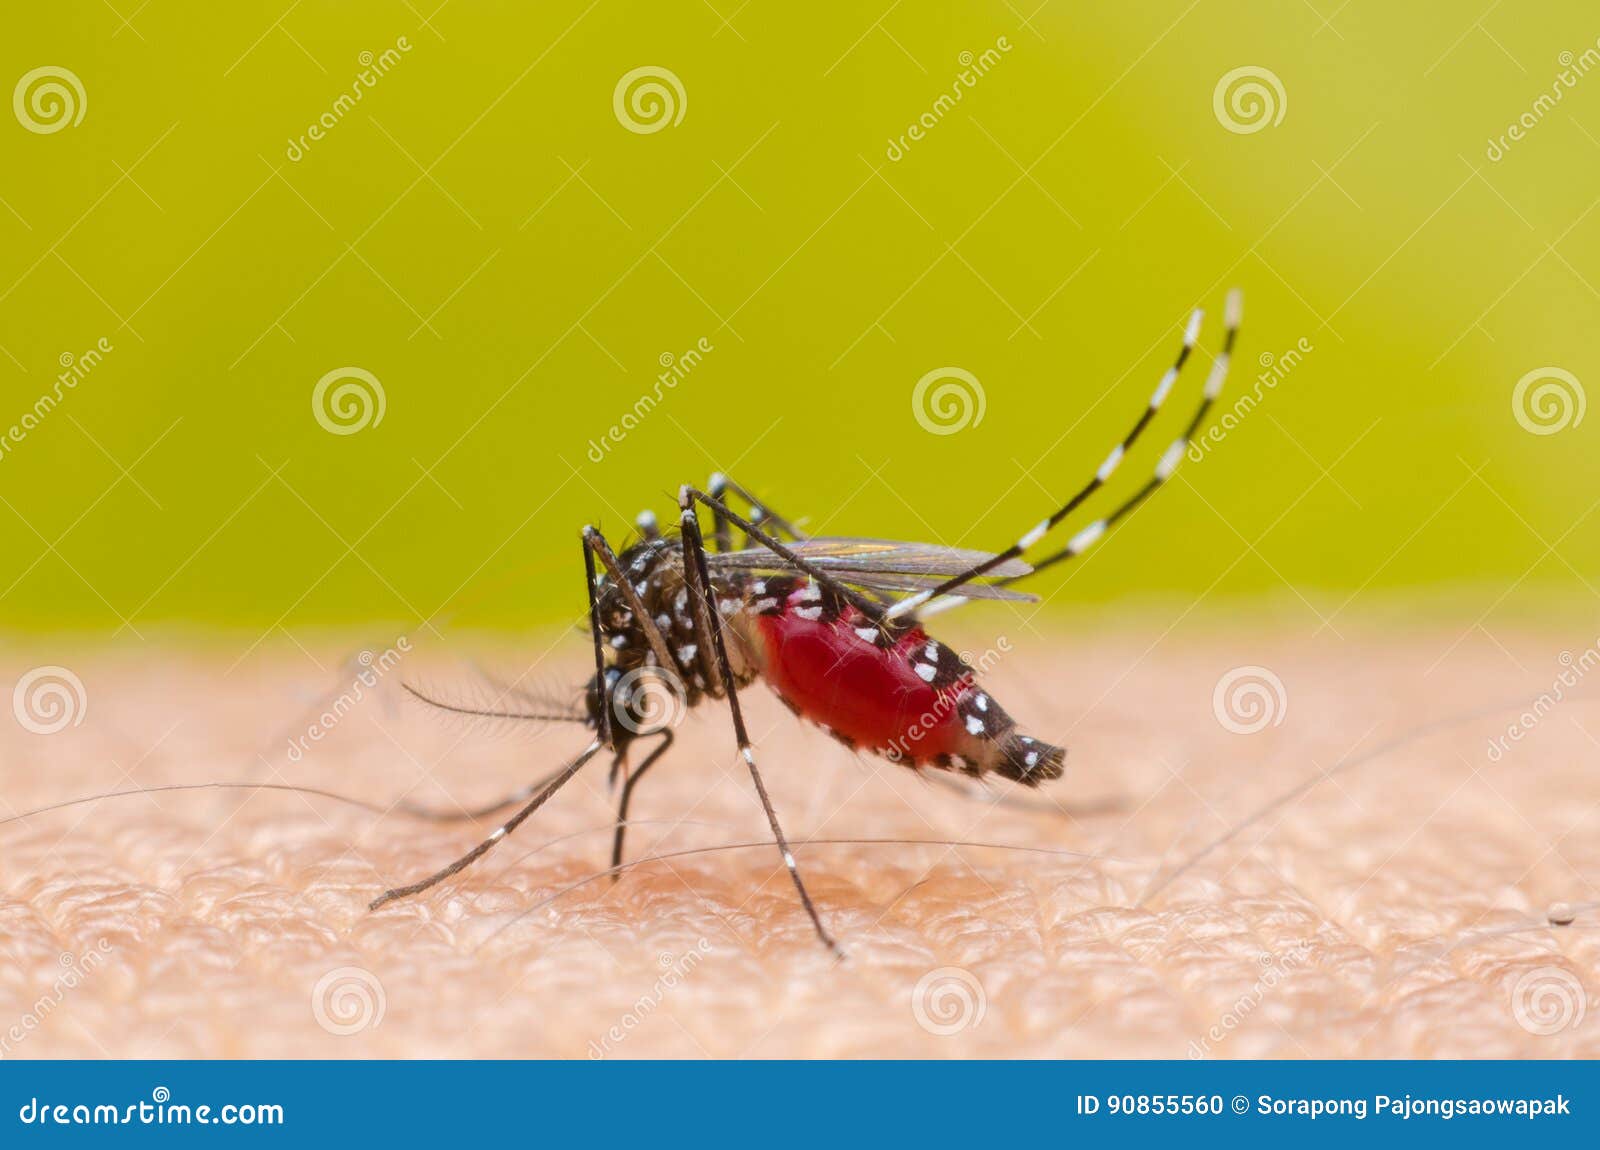 mosquito on skin human